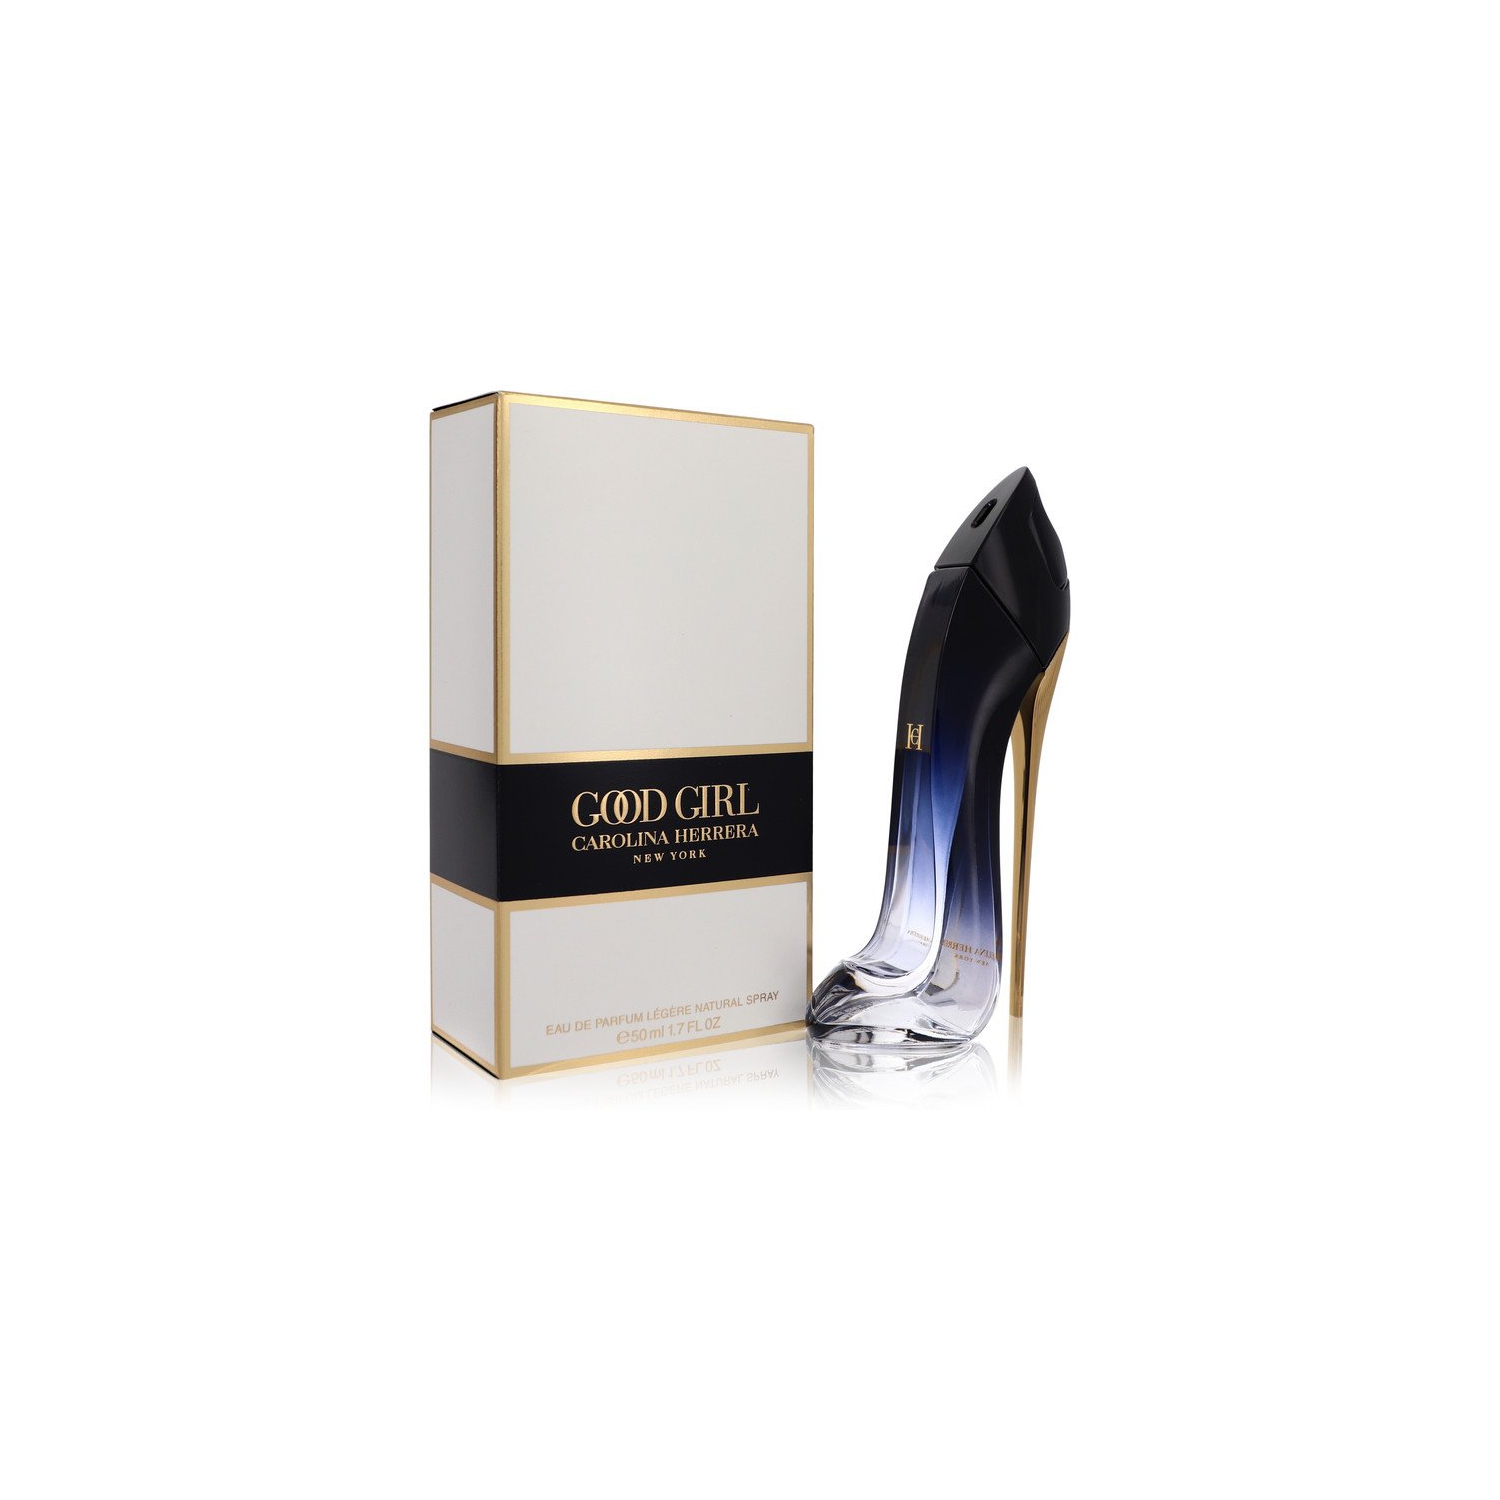 Good Girl Legere by Carolina Herrera Eau De Parfum Legere Spray 1.7 oz for Women